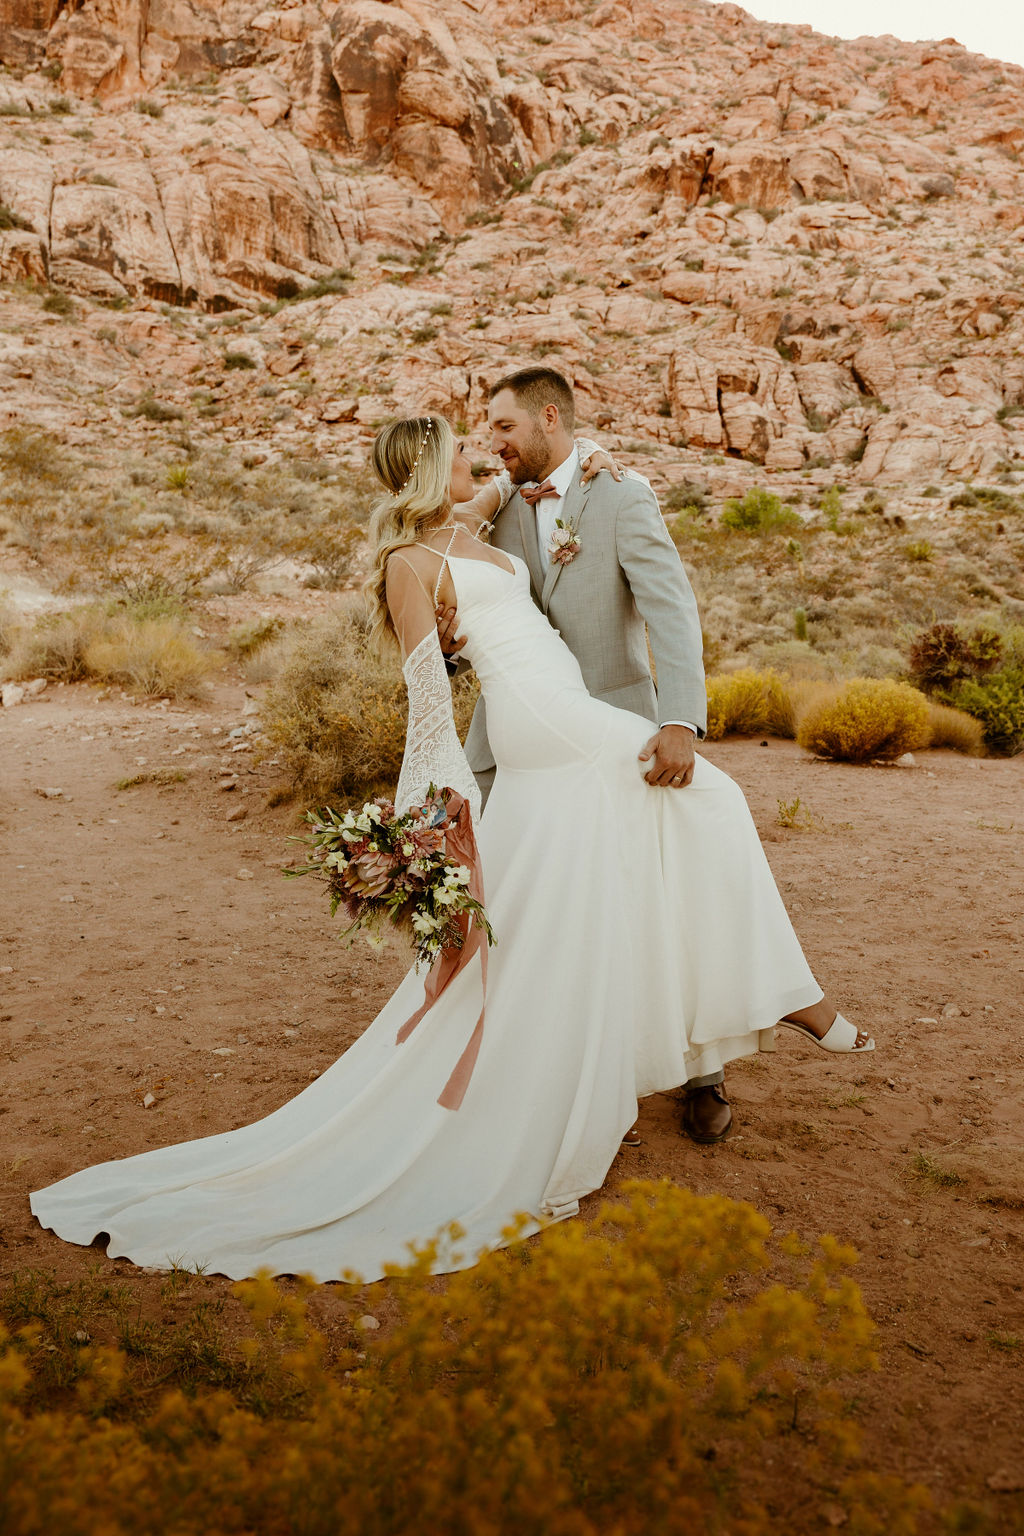 Red Rock Desert & Neon Vegas Lights. Newlyweds pose for a fun semi dip photo in the desert 